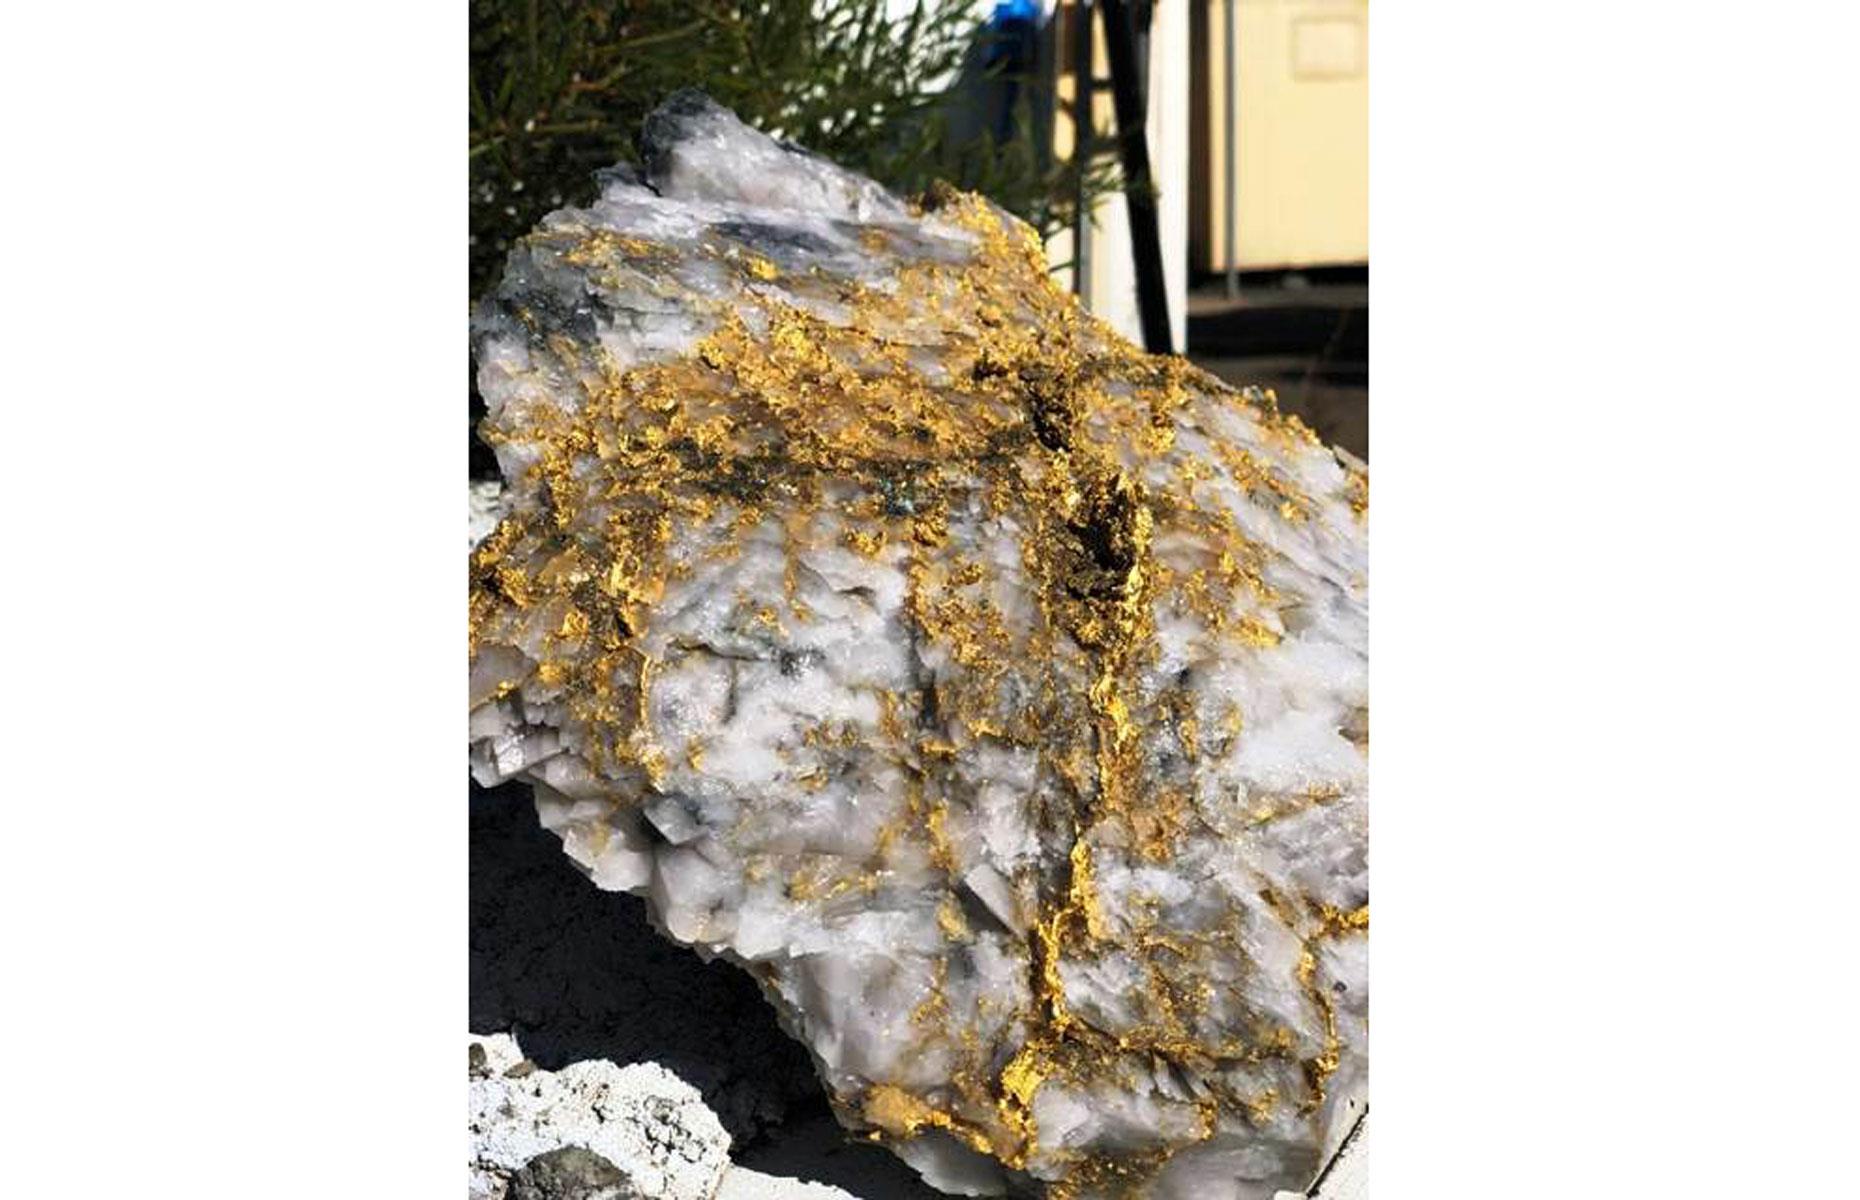 The gold-laden rocks worth $13 million (£10m)